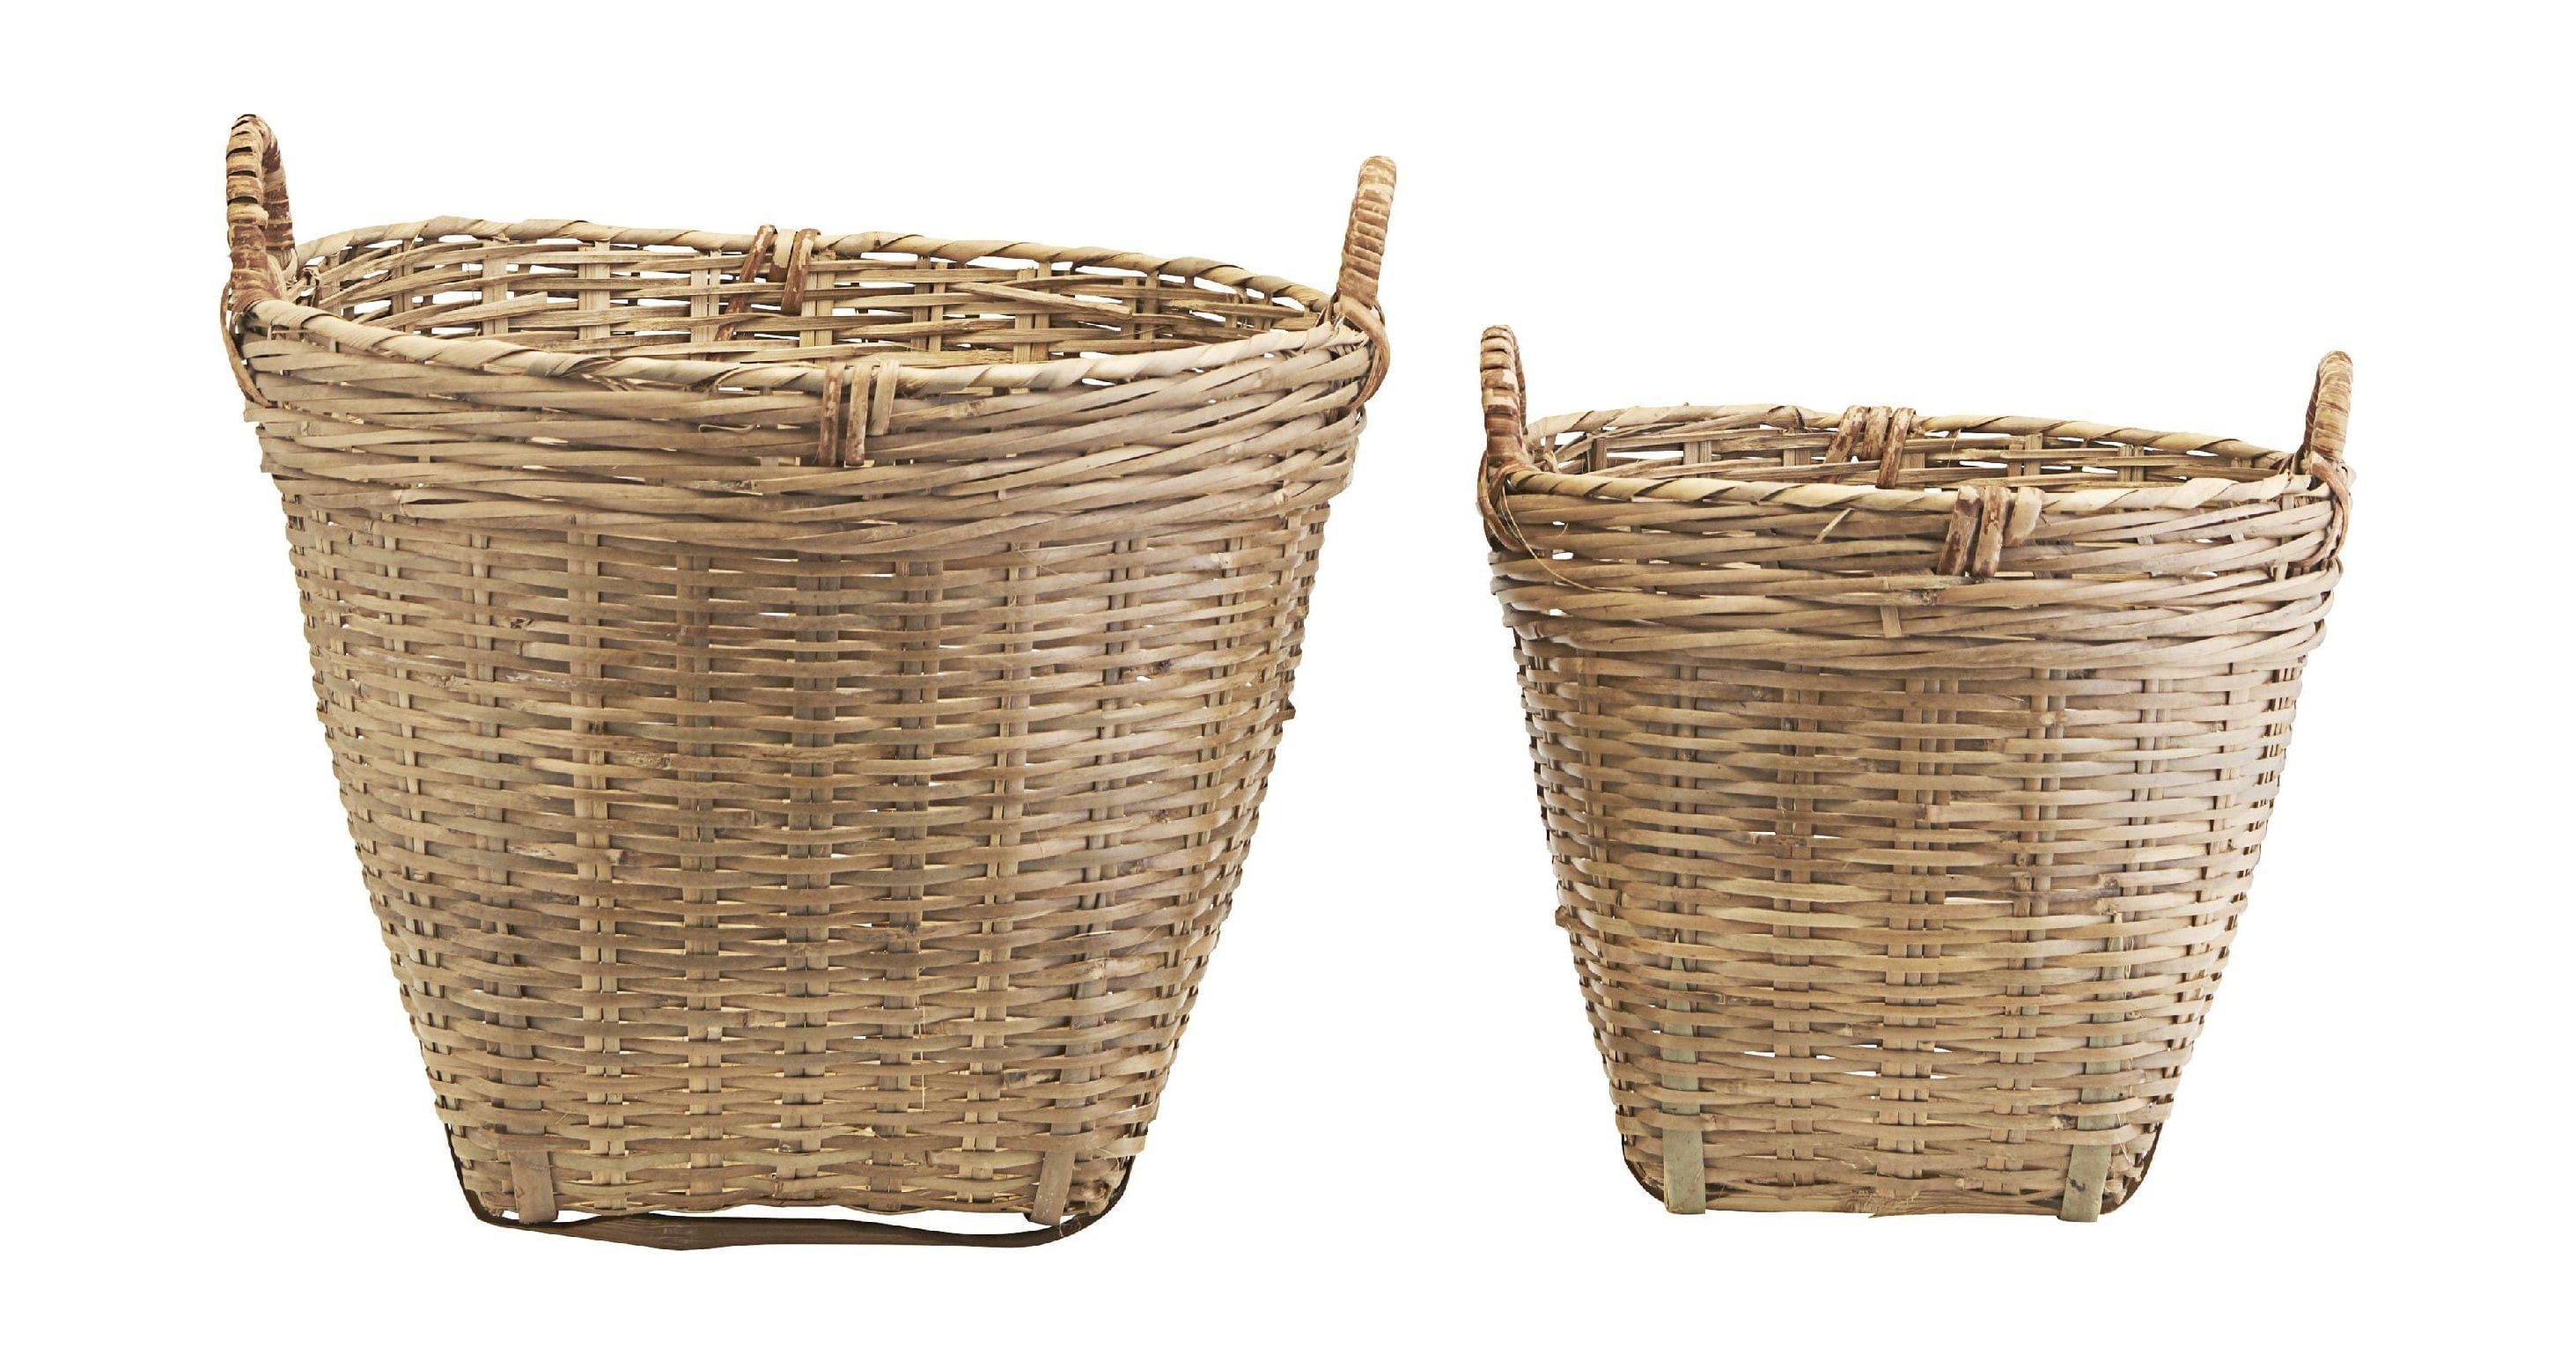 Meraki Tradition Storage Basket Made Of Bamboo Set Of 2, Lx Wx H 42x40x37 & øx H 30x26 Cm, 42x40x37 Cm